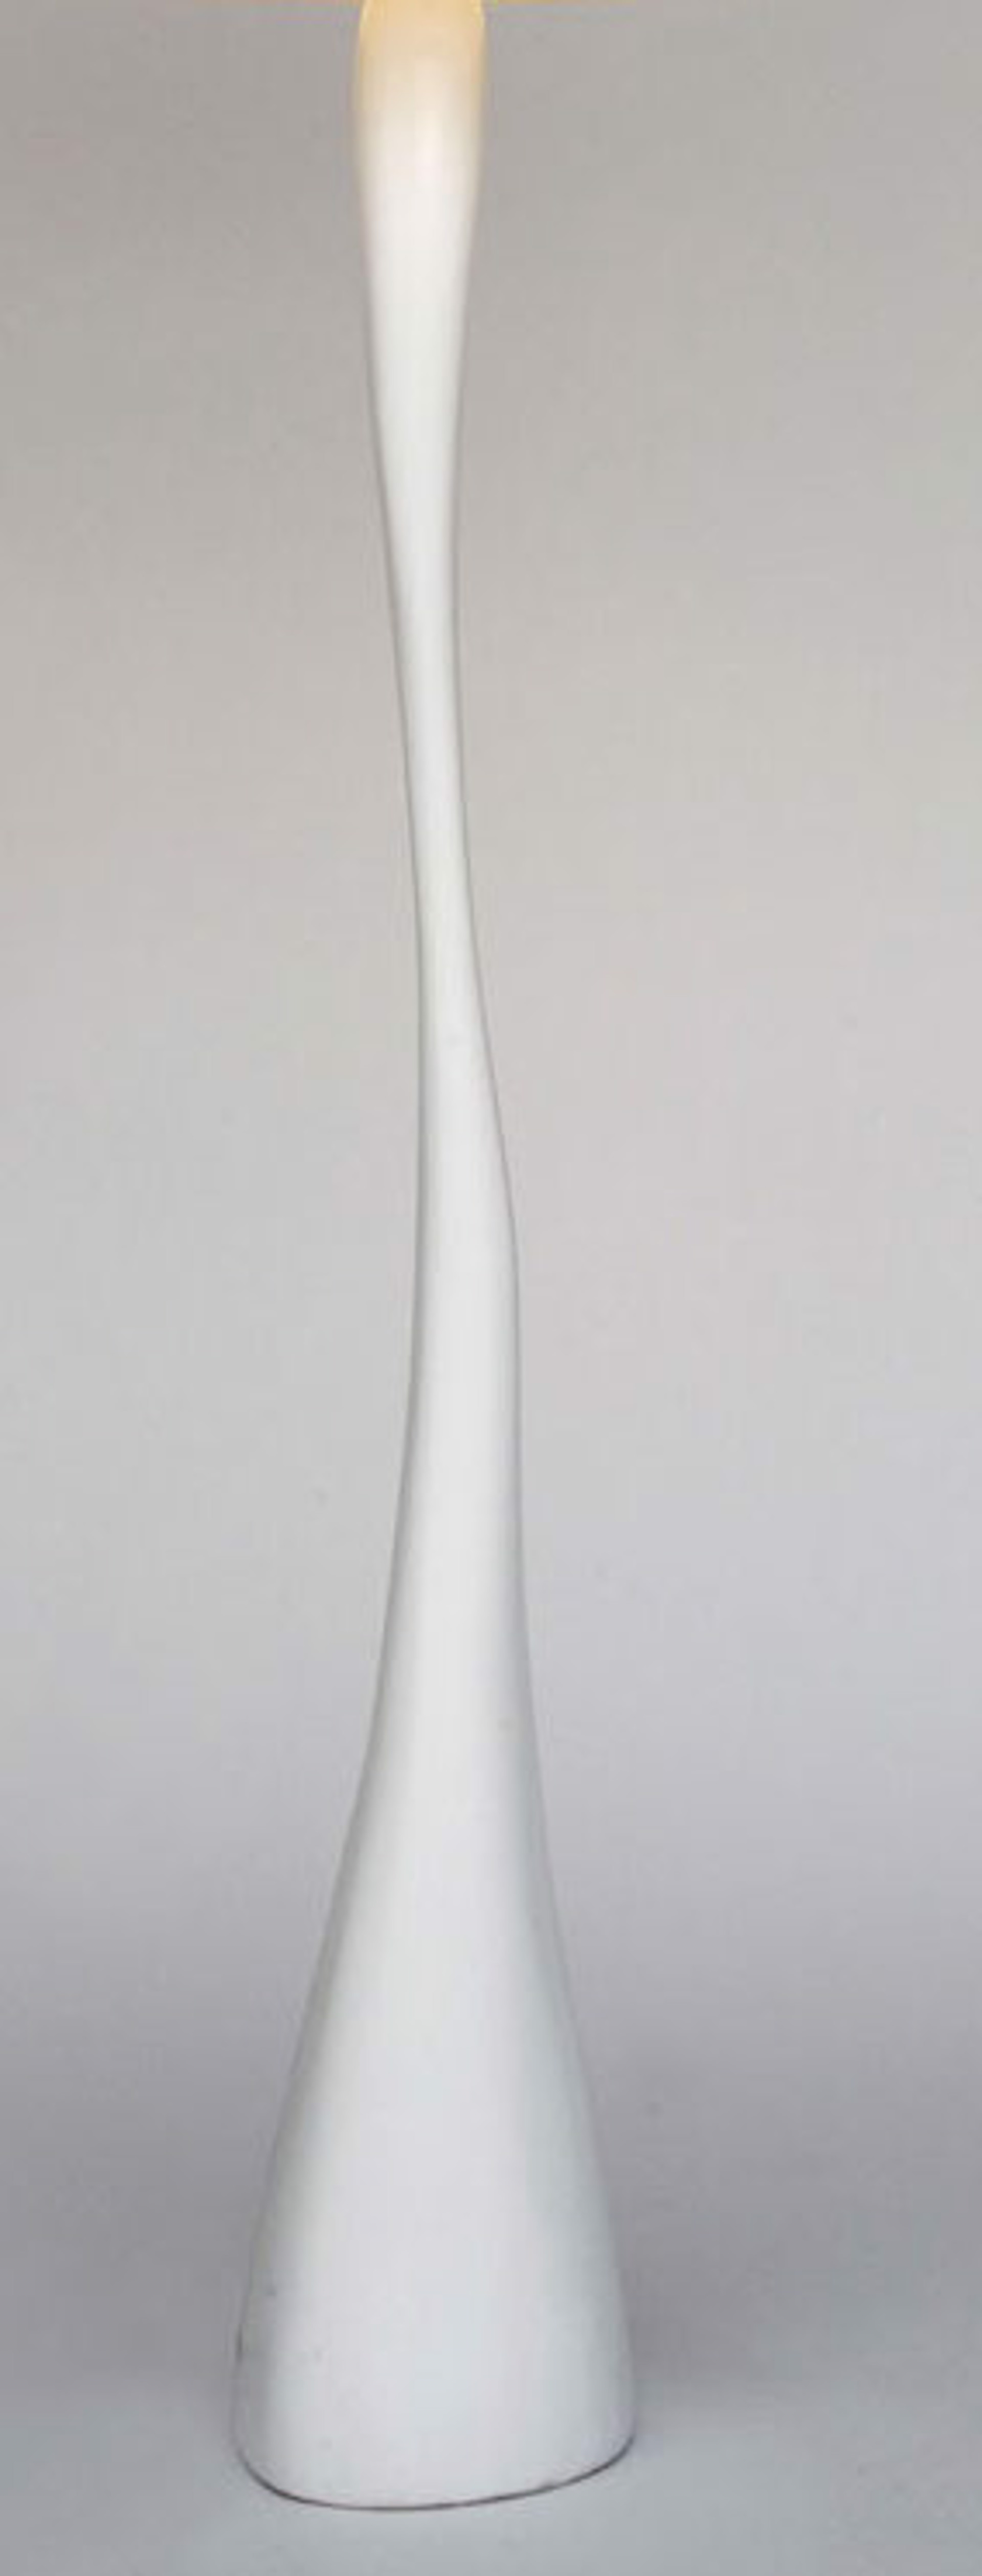 "Leda" Floor lamp by Jacques Jarrige